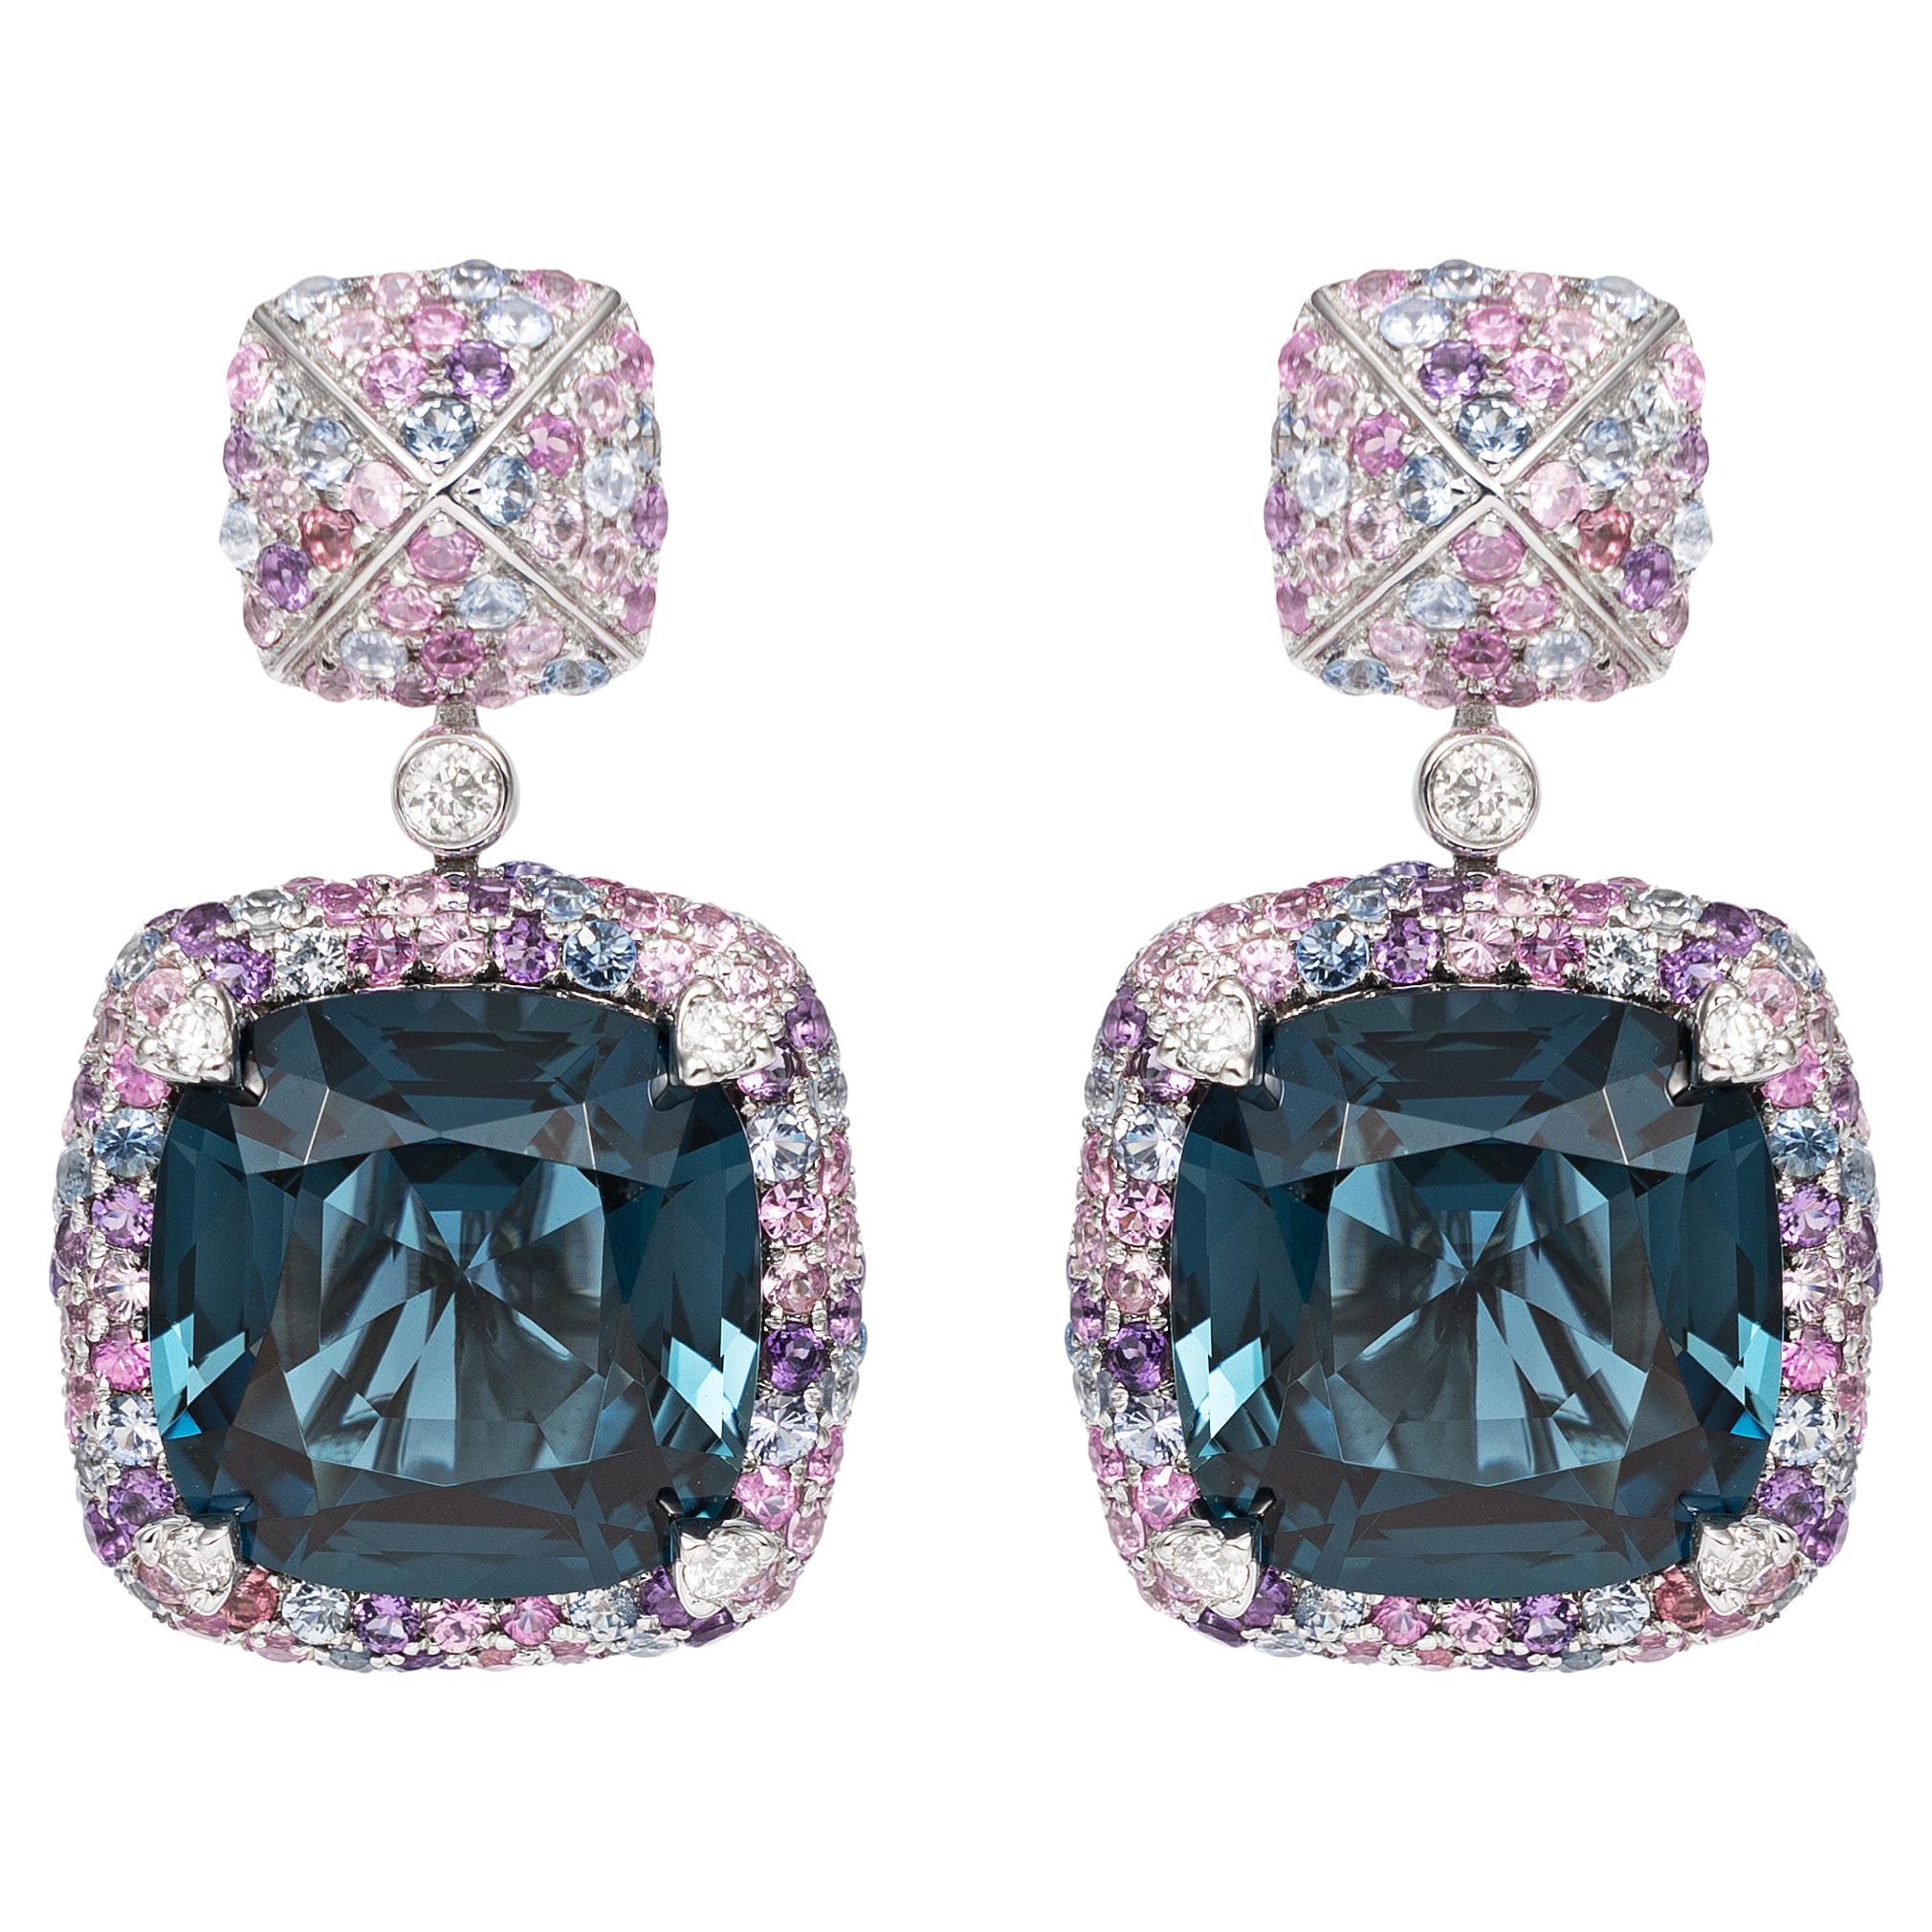 Blue Topaz Candy Earrings with Gemstone & Diamond in 18 Karat White Gold